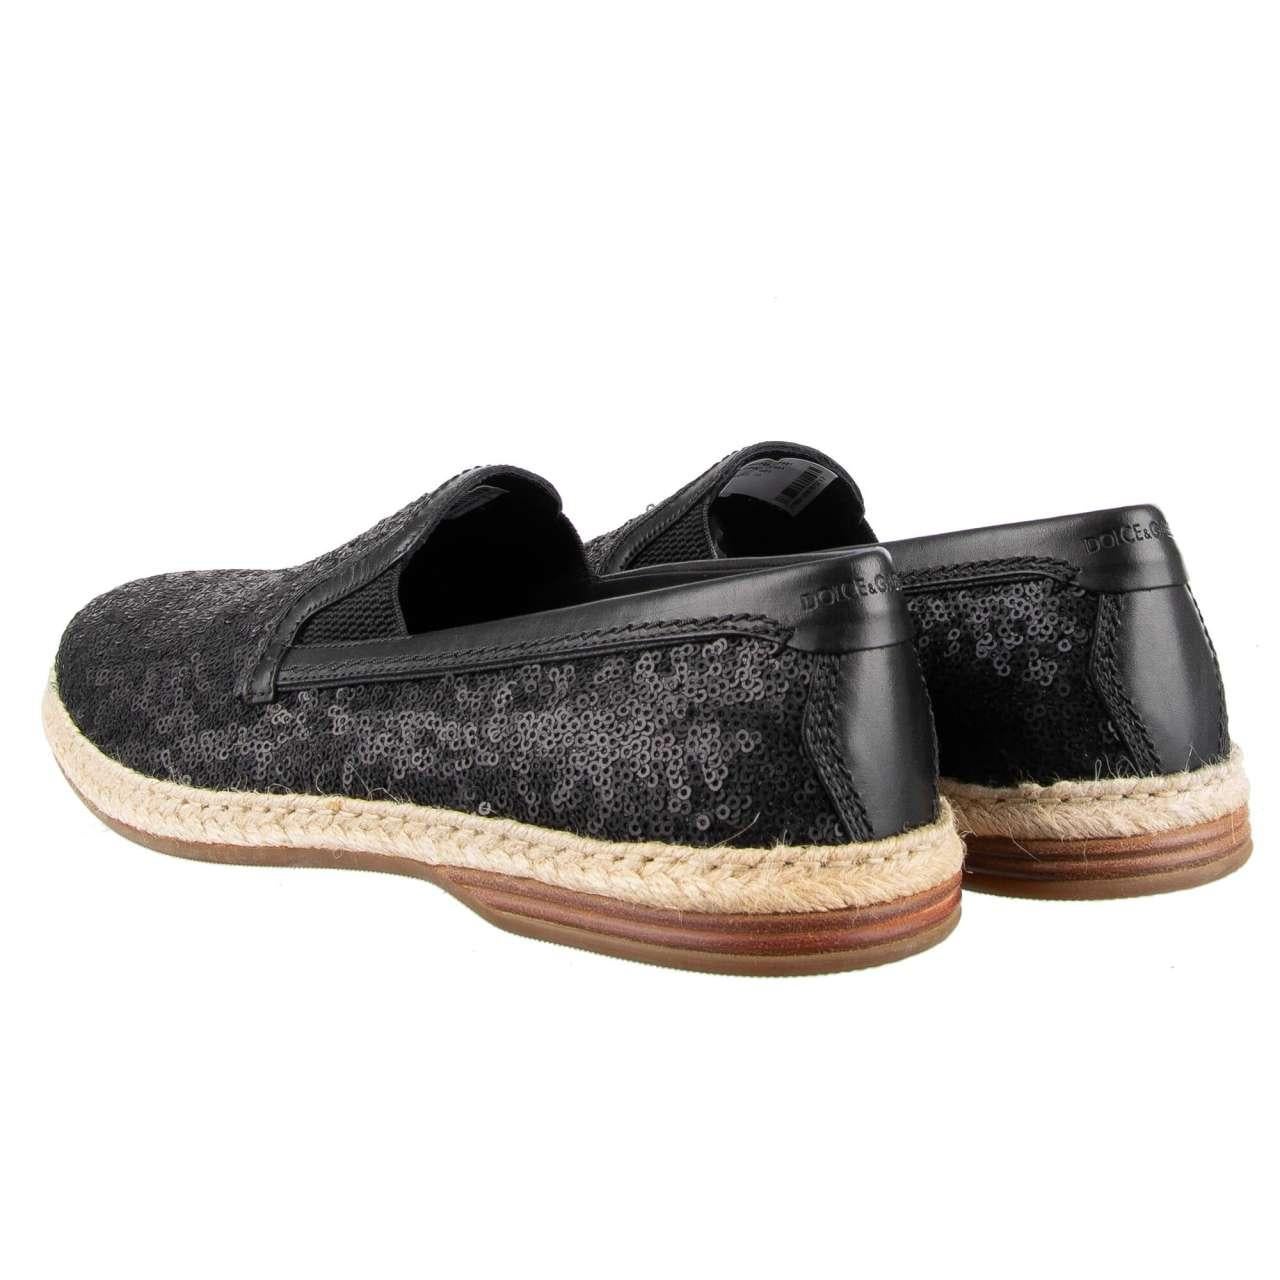 Dolce & Gabbana - Sequined Loafer Shoes MONDELLO Black 42 For Sale 1